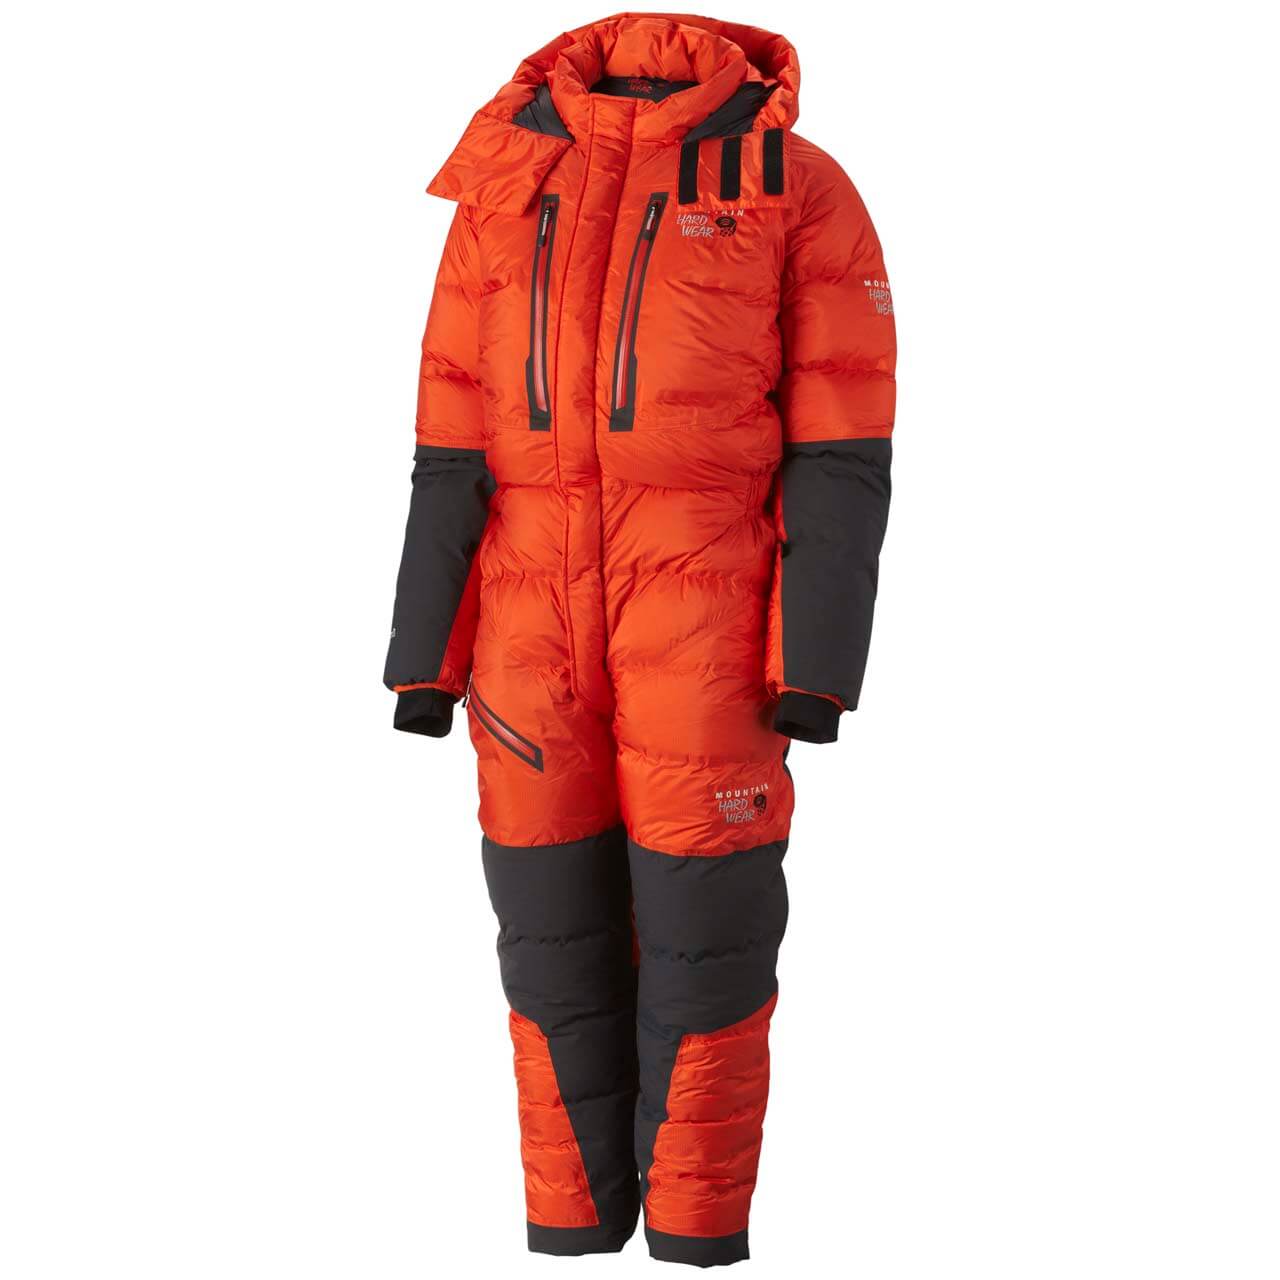 Mountain Hardwear Absolute Zero Expeditionsanzug - State Orange, XL